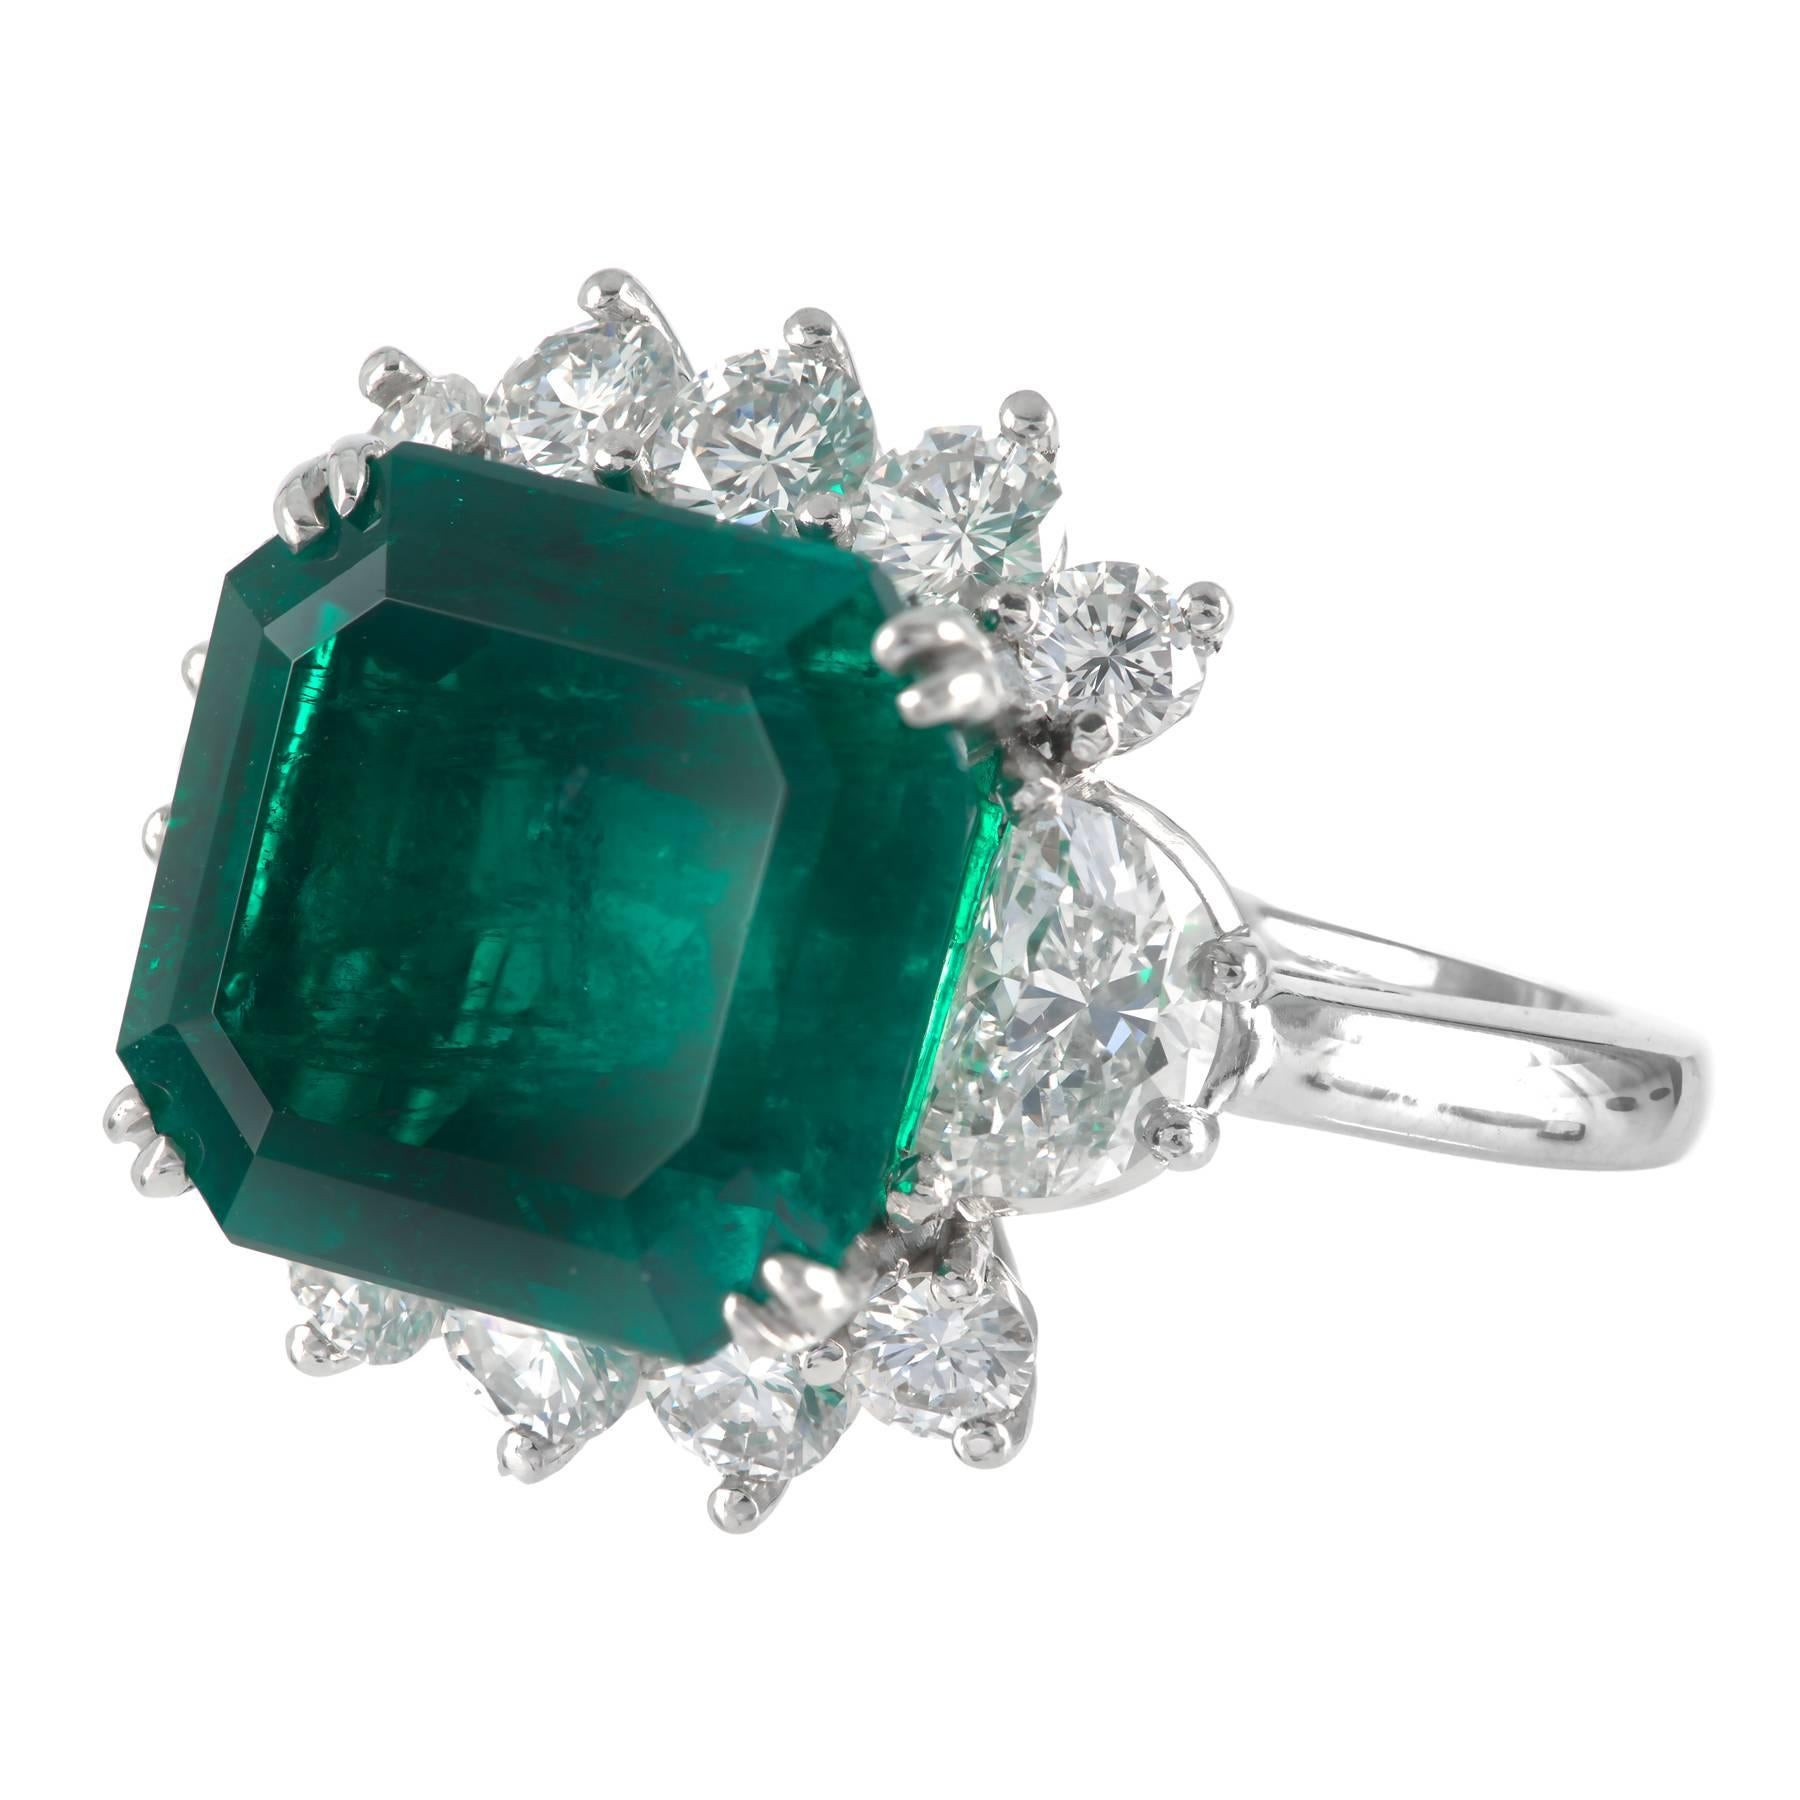 Emerald Cut 7.50 Carat Square Colombian Emerald Diamond Engagement Ring